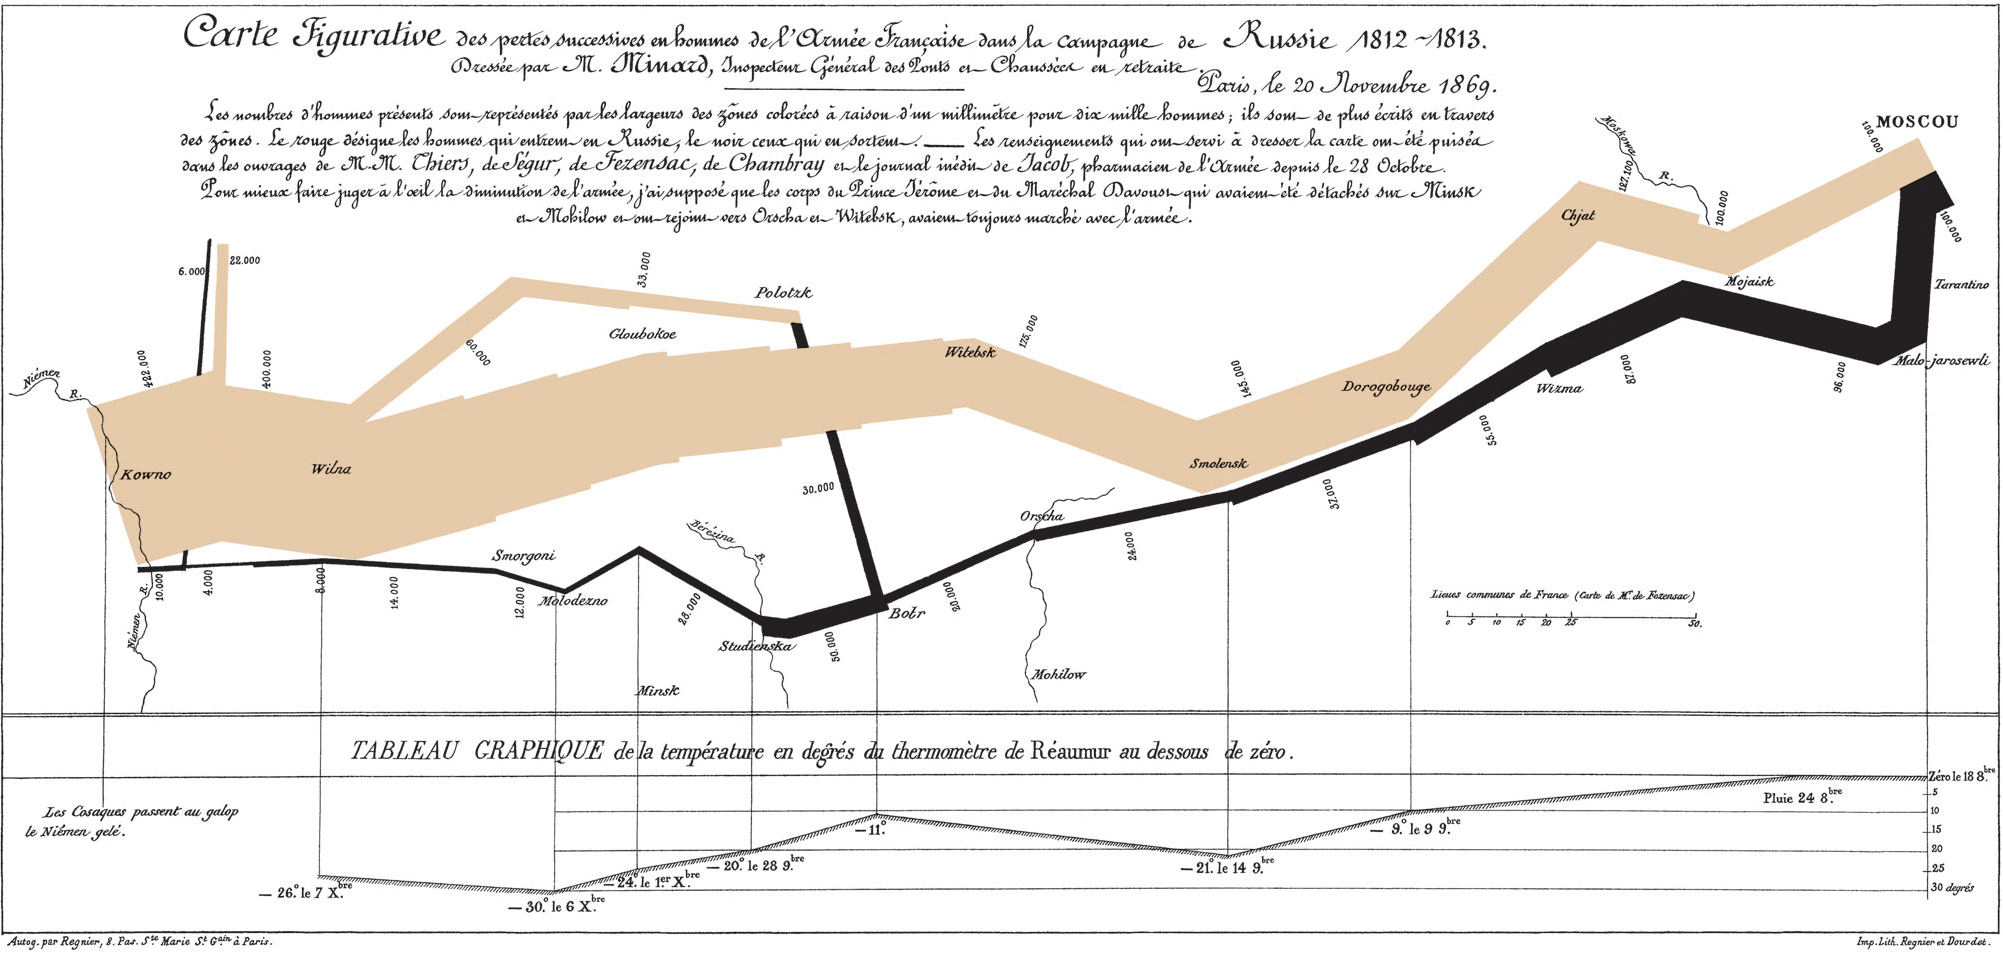 Minard Map of Napoleon's March by Charles Joseph Minard